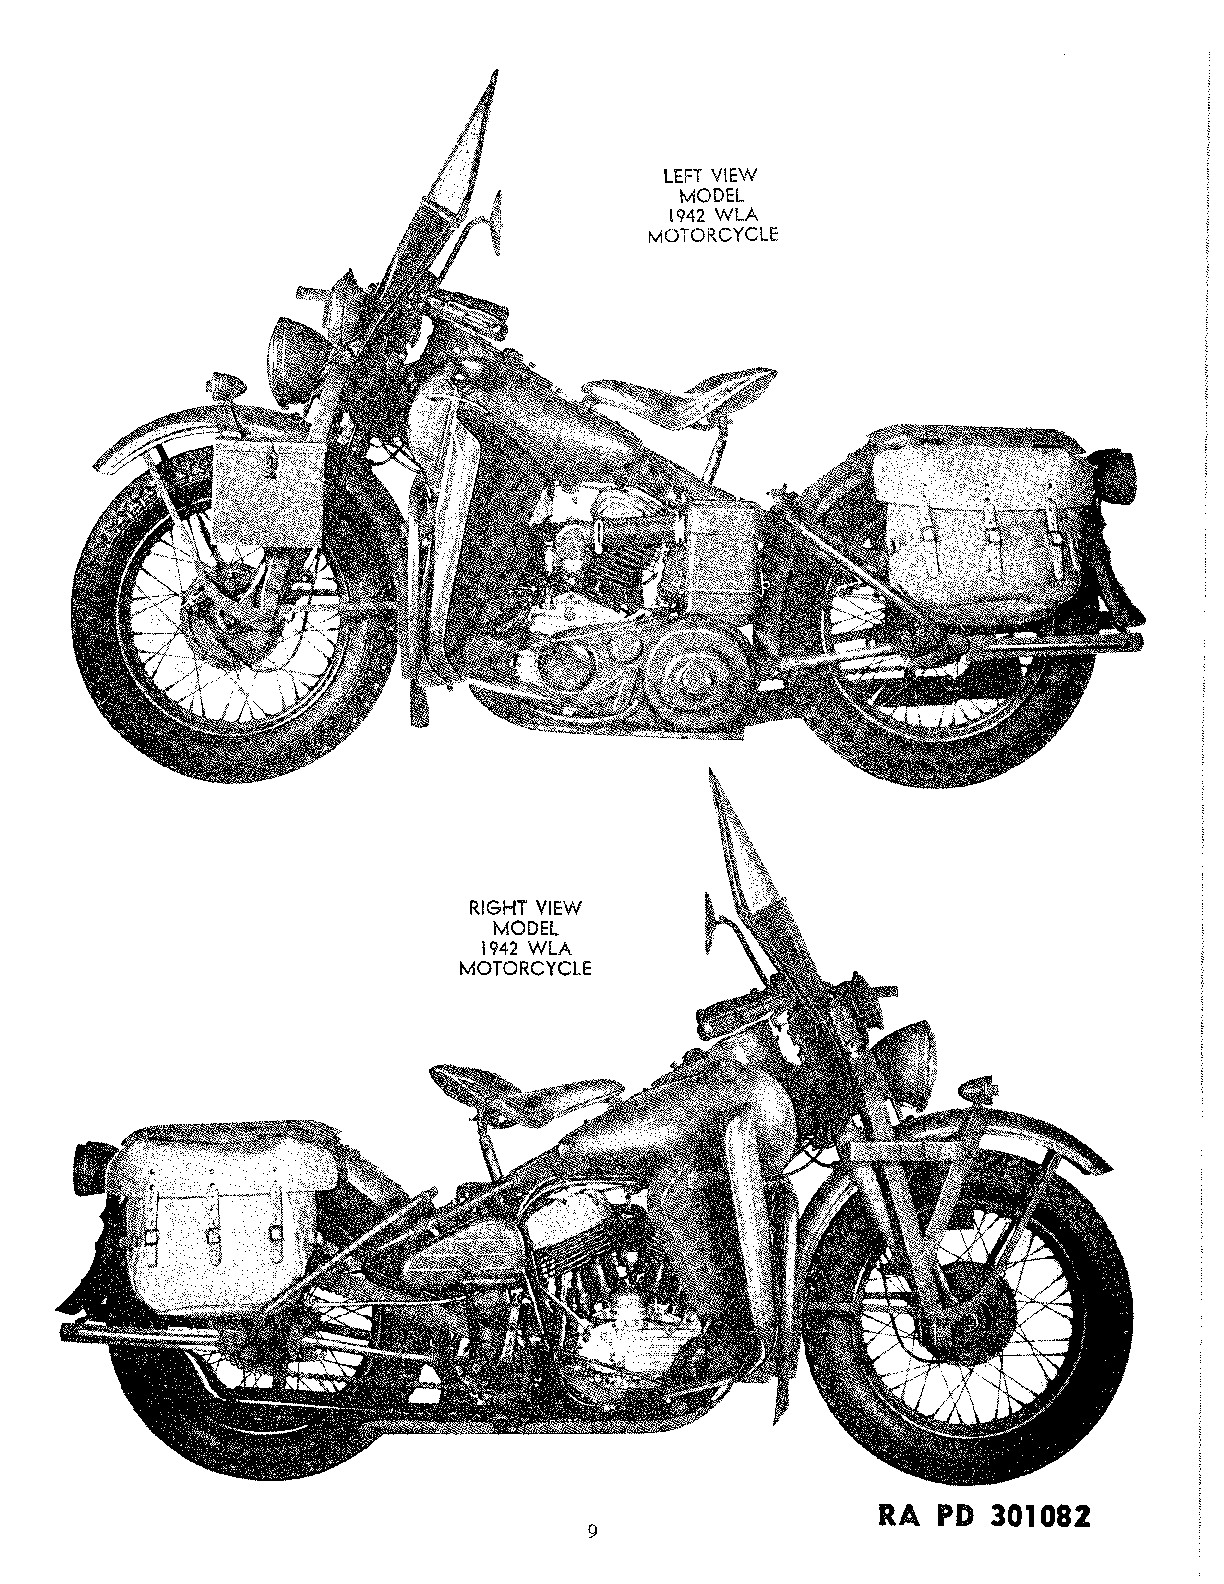 1943 - Harley-Davidson SNL G-523 Service parts catalog